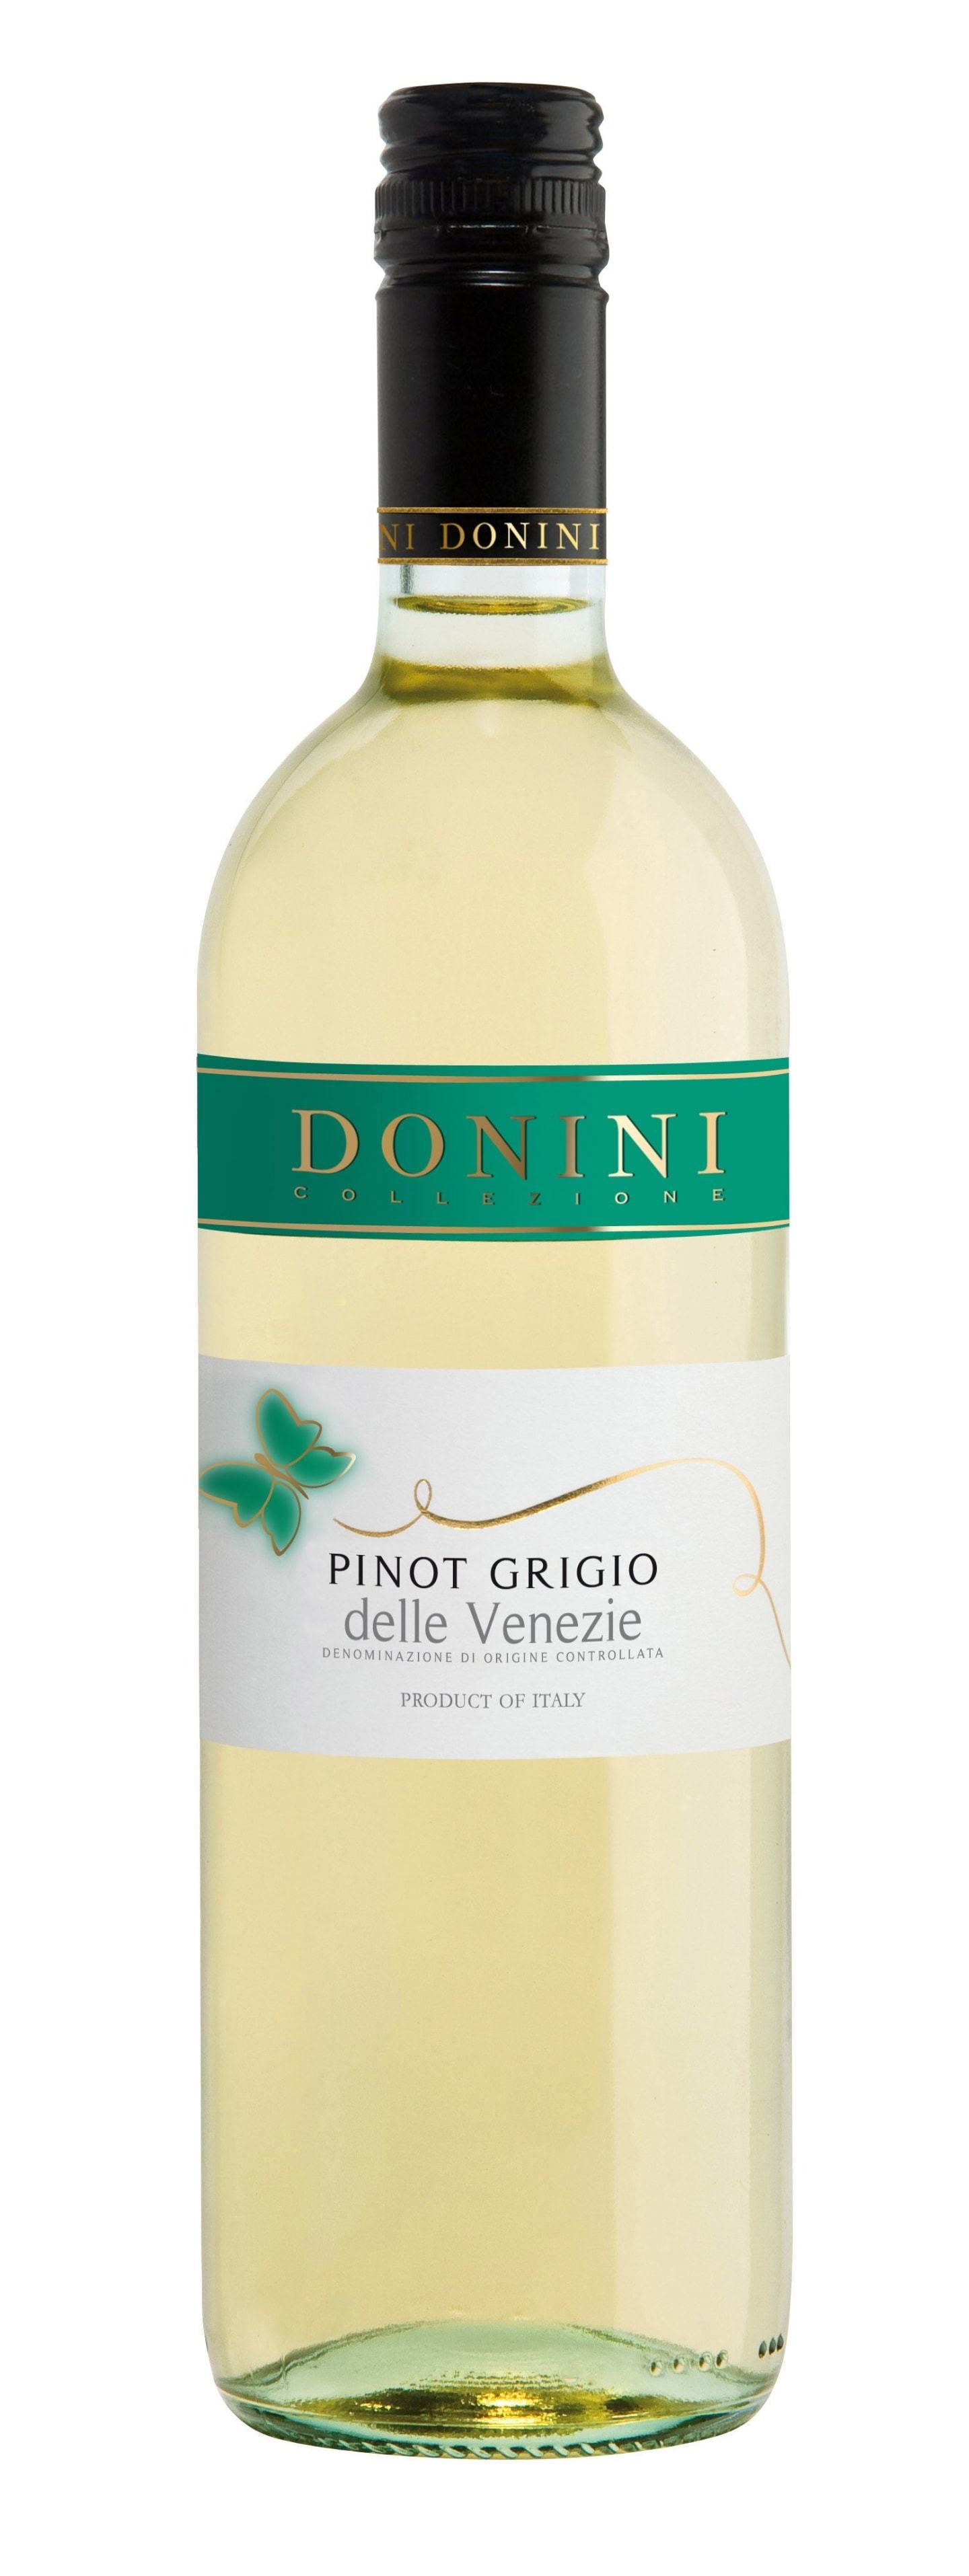 Donini Pinot Grigio 2018